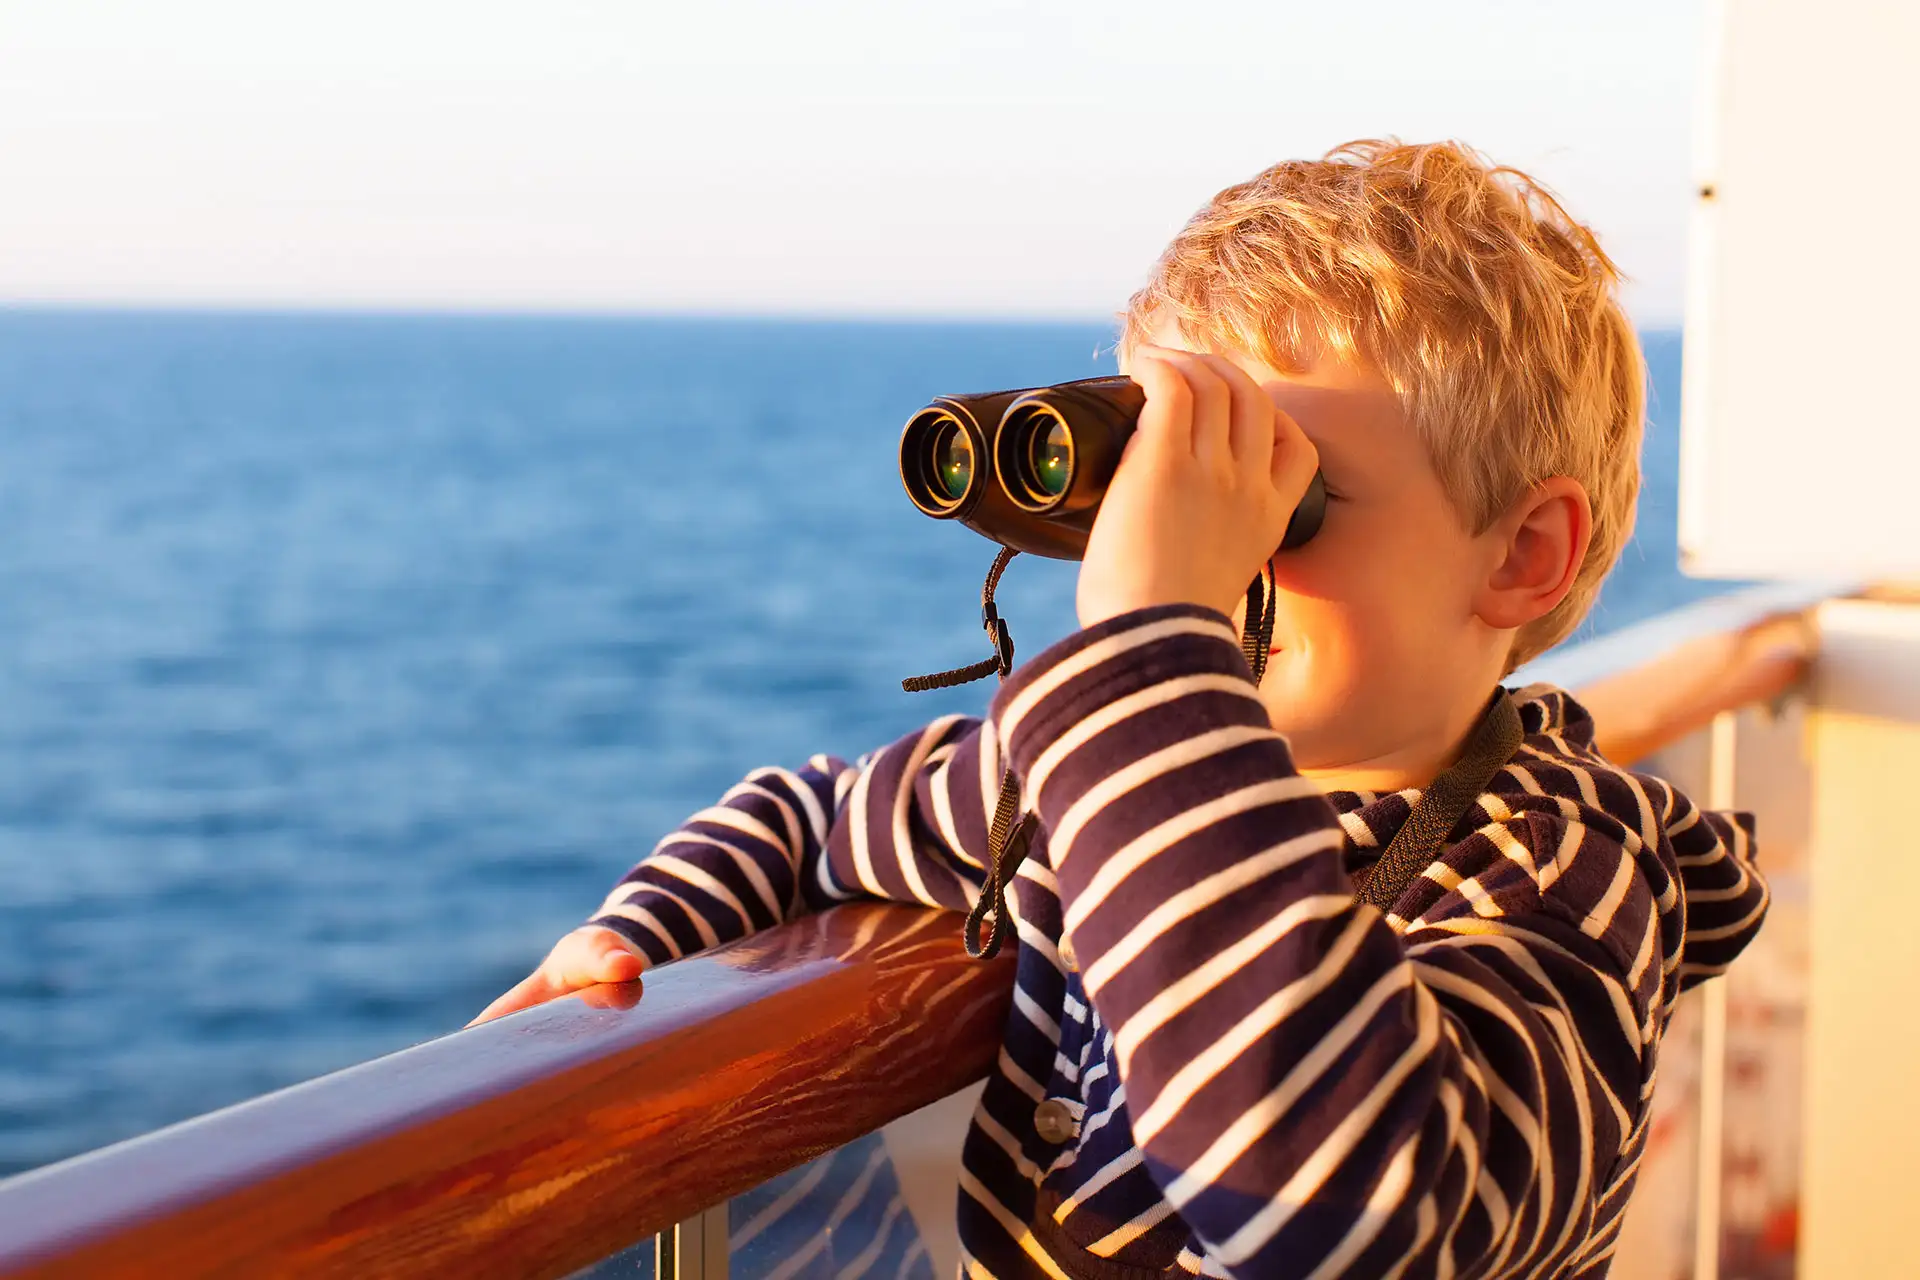 Young Boy With Binoculars on Cruise